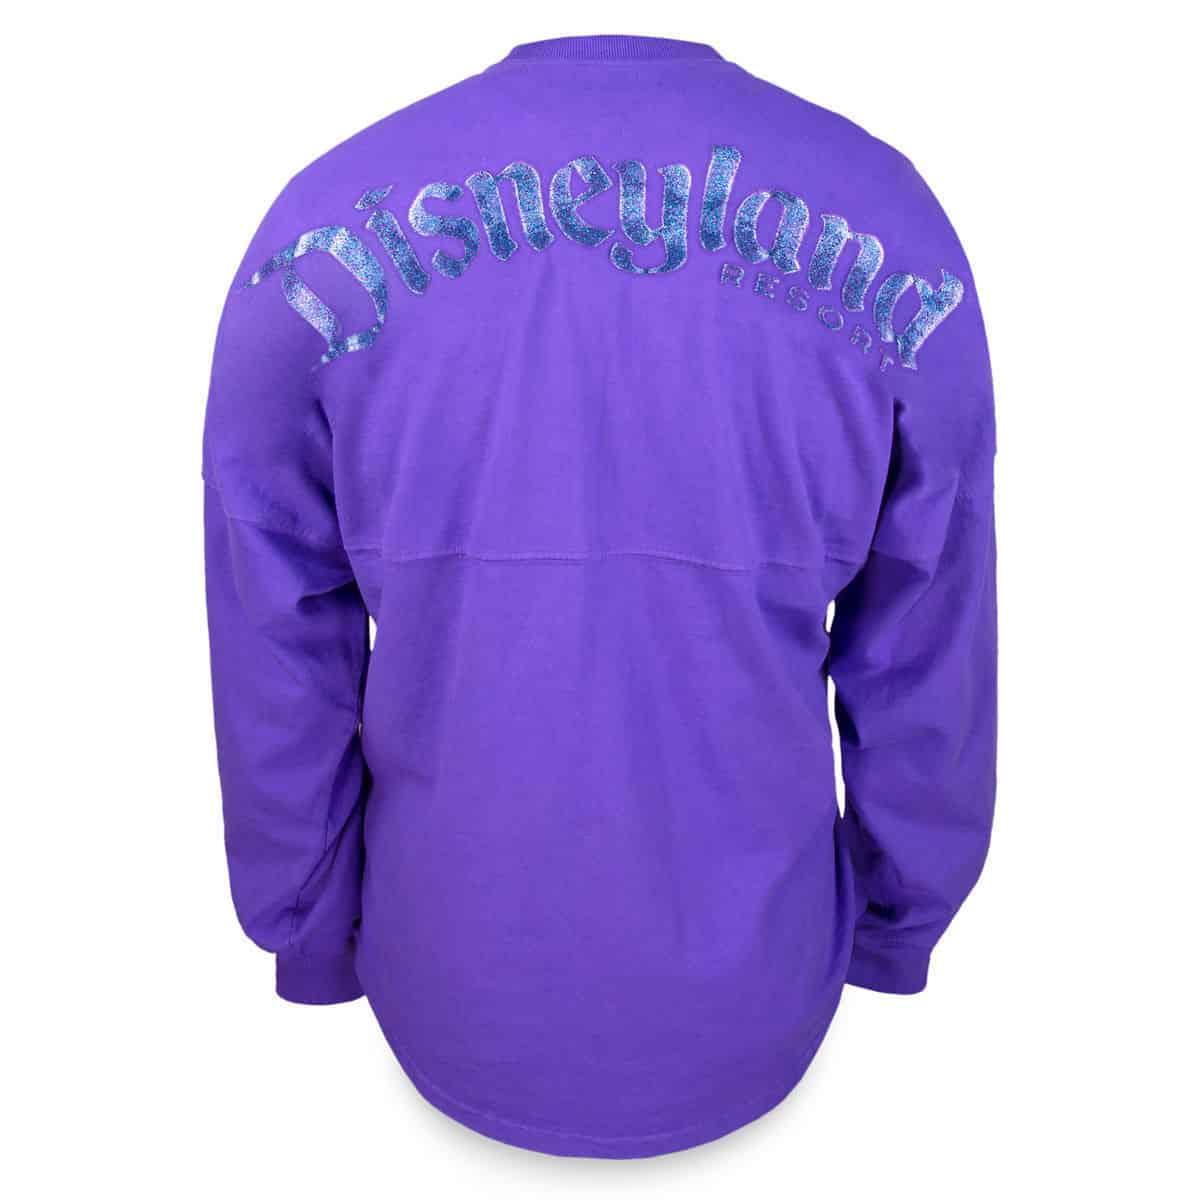 Potion Purple Disneyland Spirit Jersey for Adults - $64.99